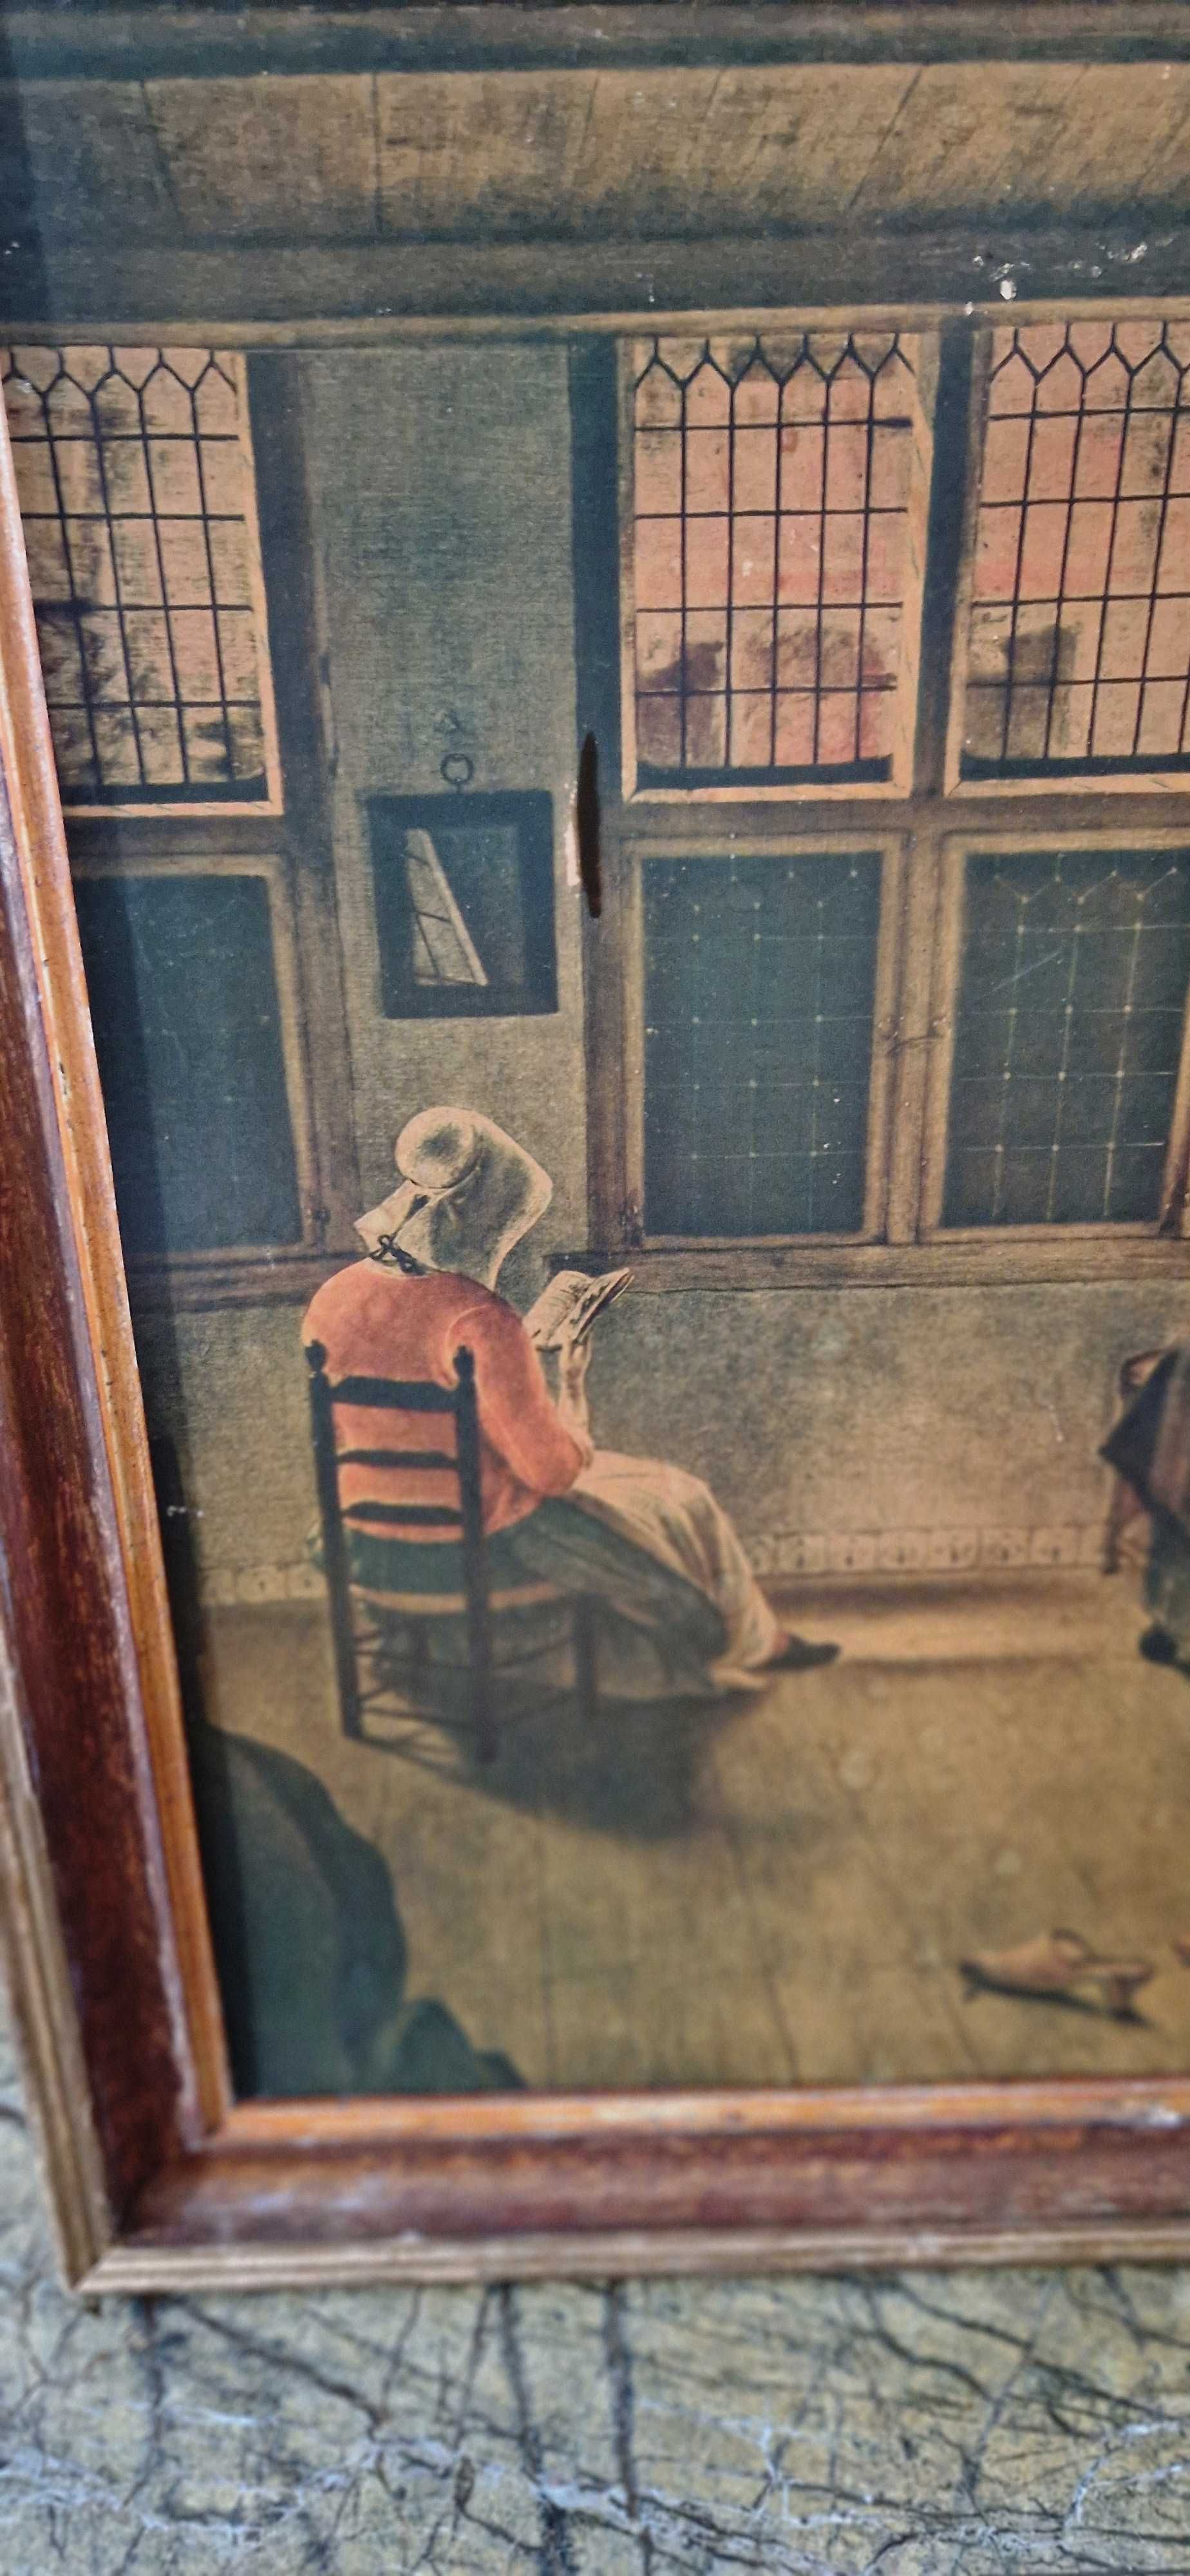 Stara reprodukcja obrazu Pietera Janssensa Elinga "Czytajaca kobieta"